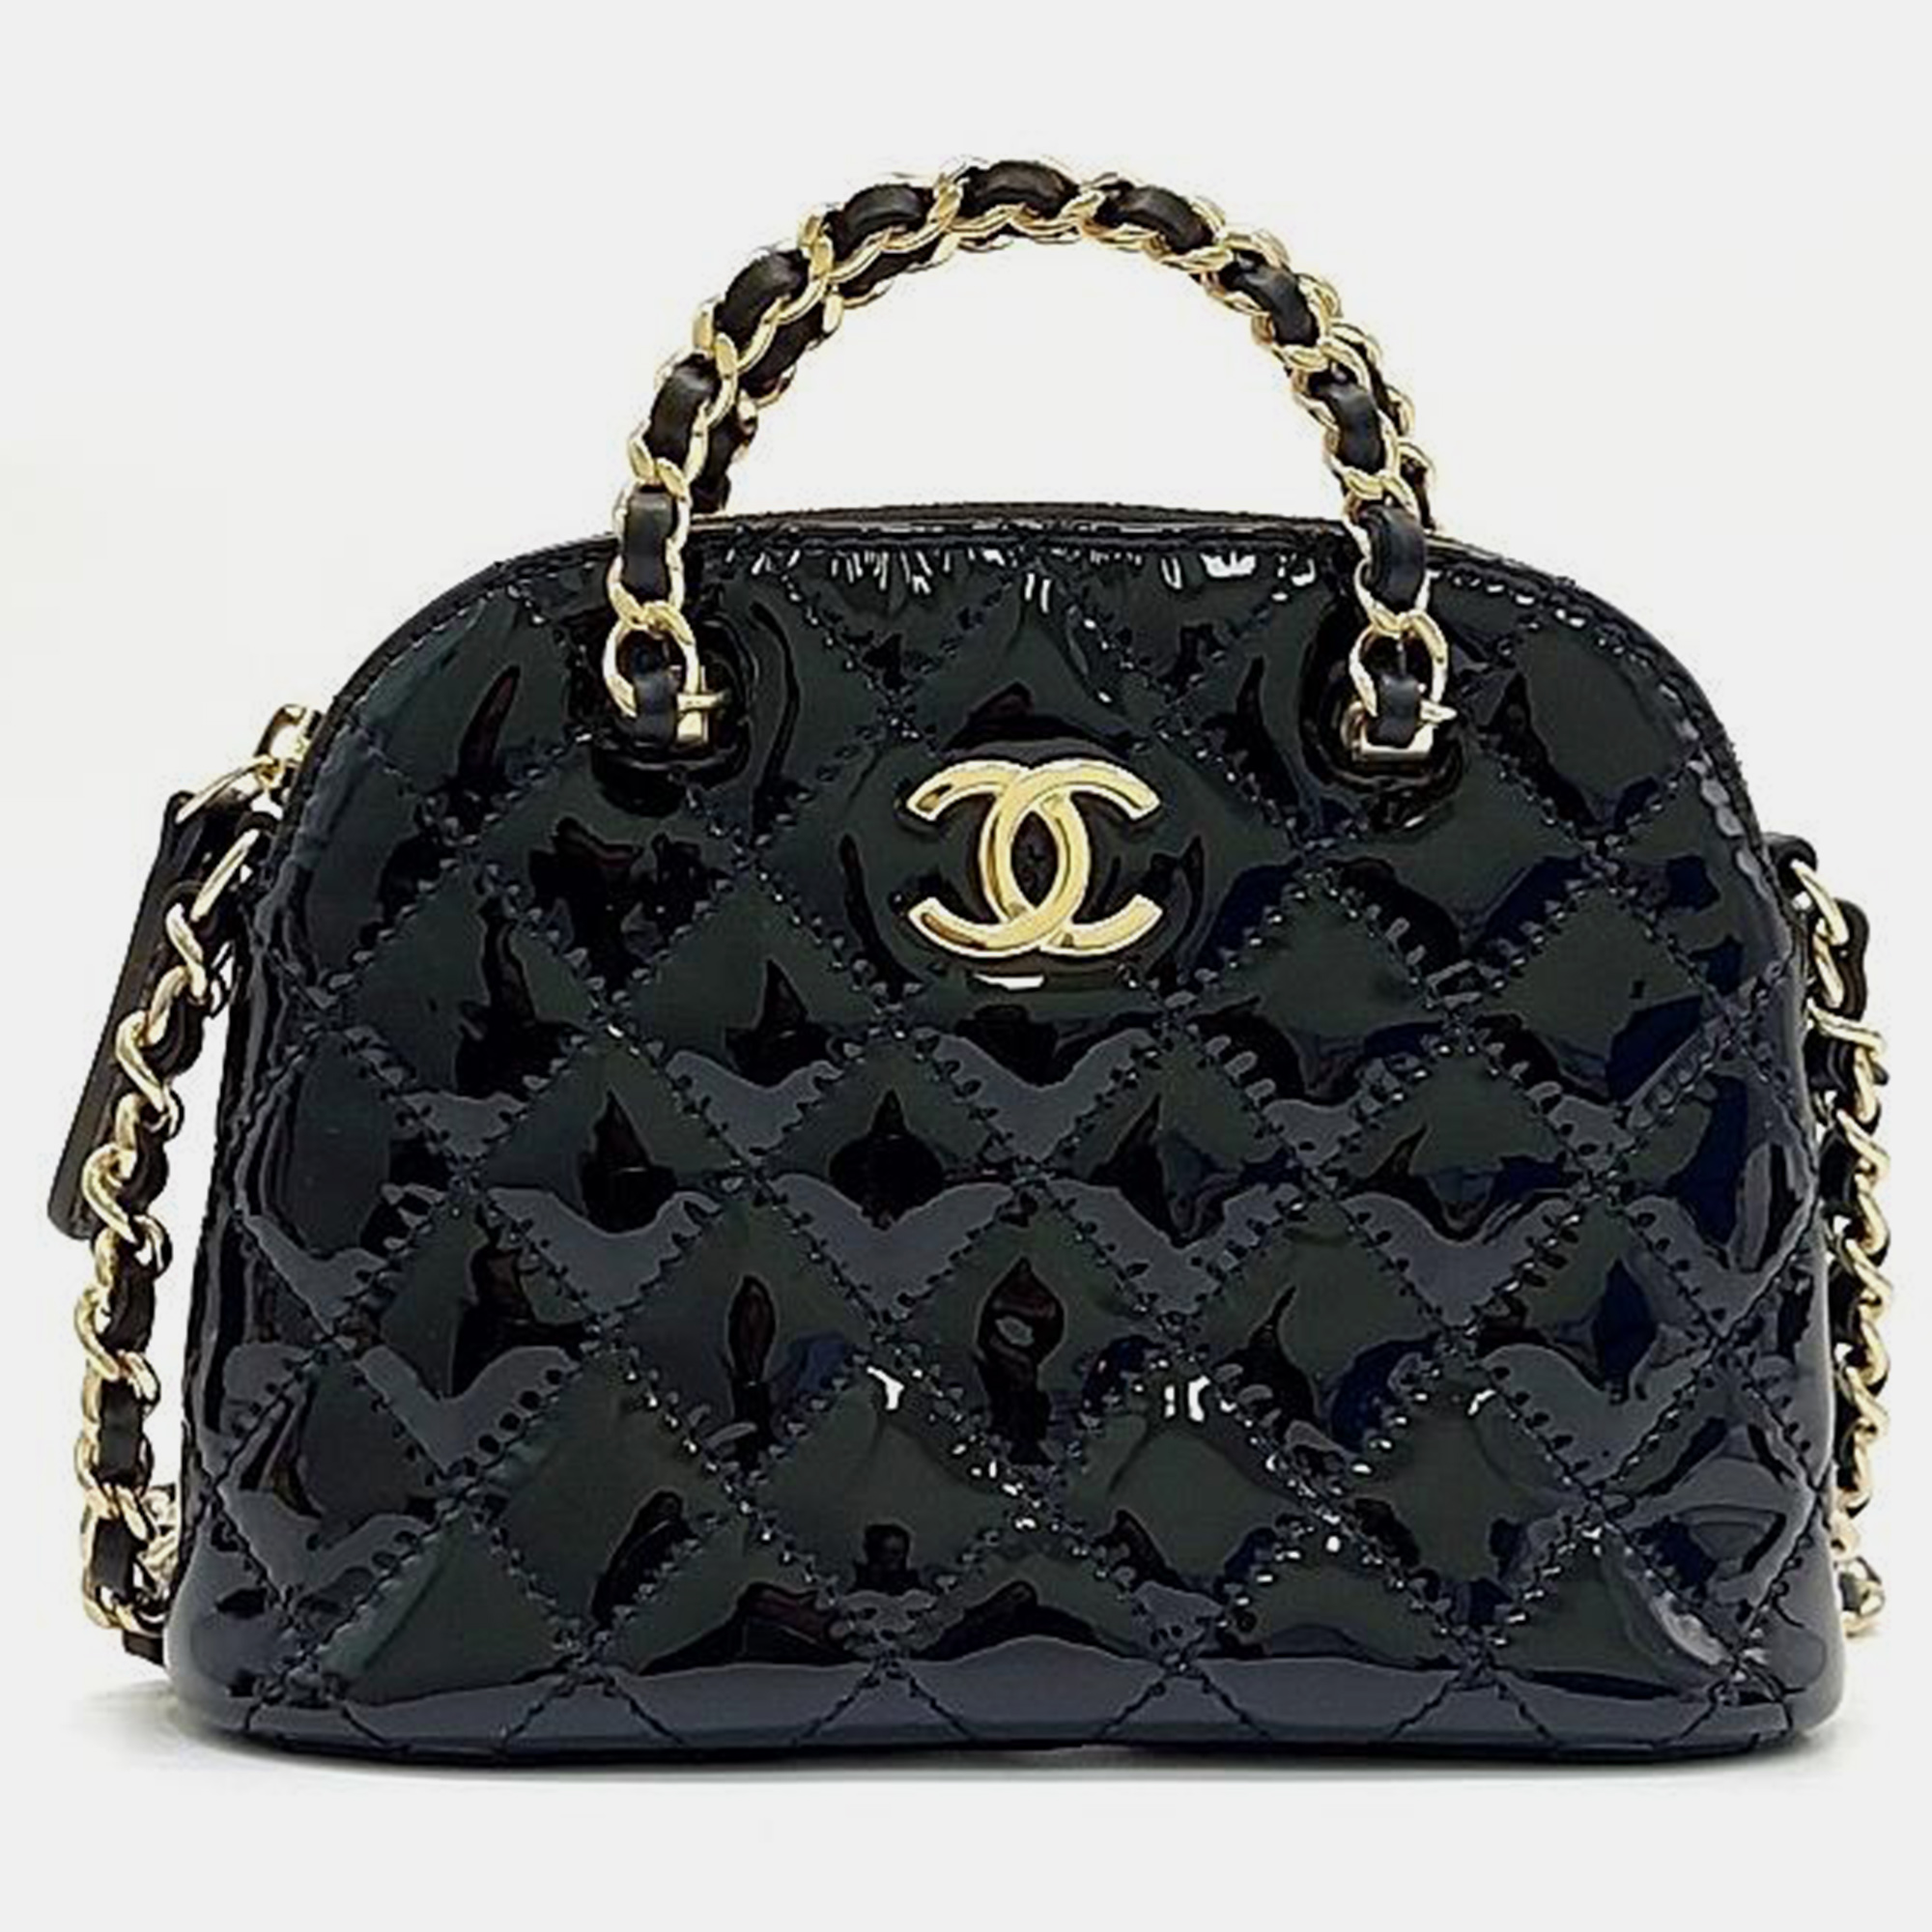 Chanel black patent leather mini crossbody bag